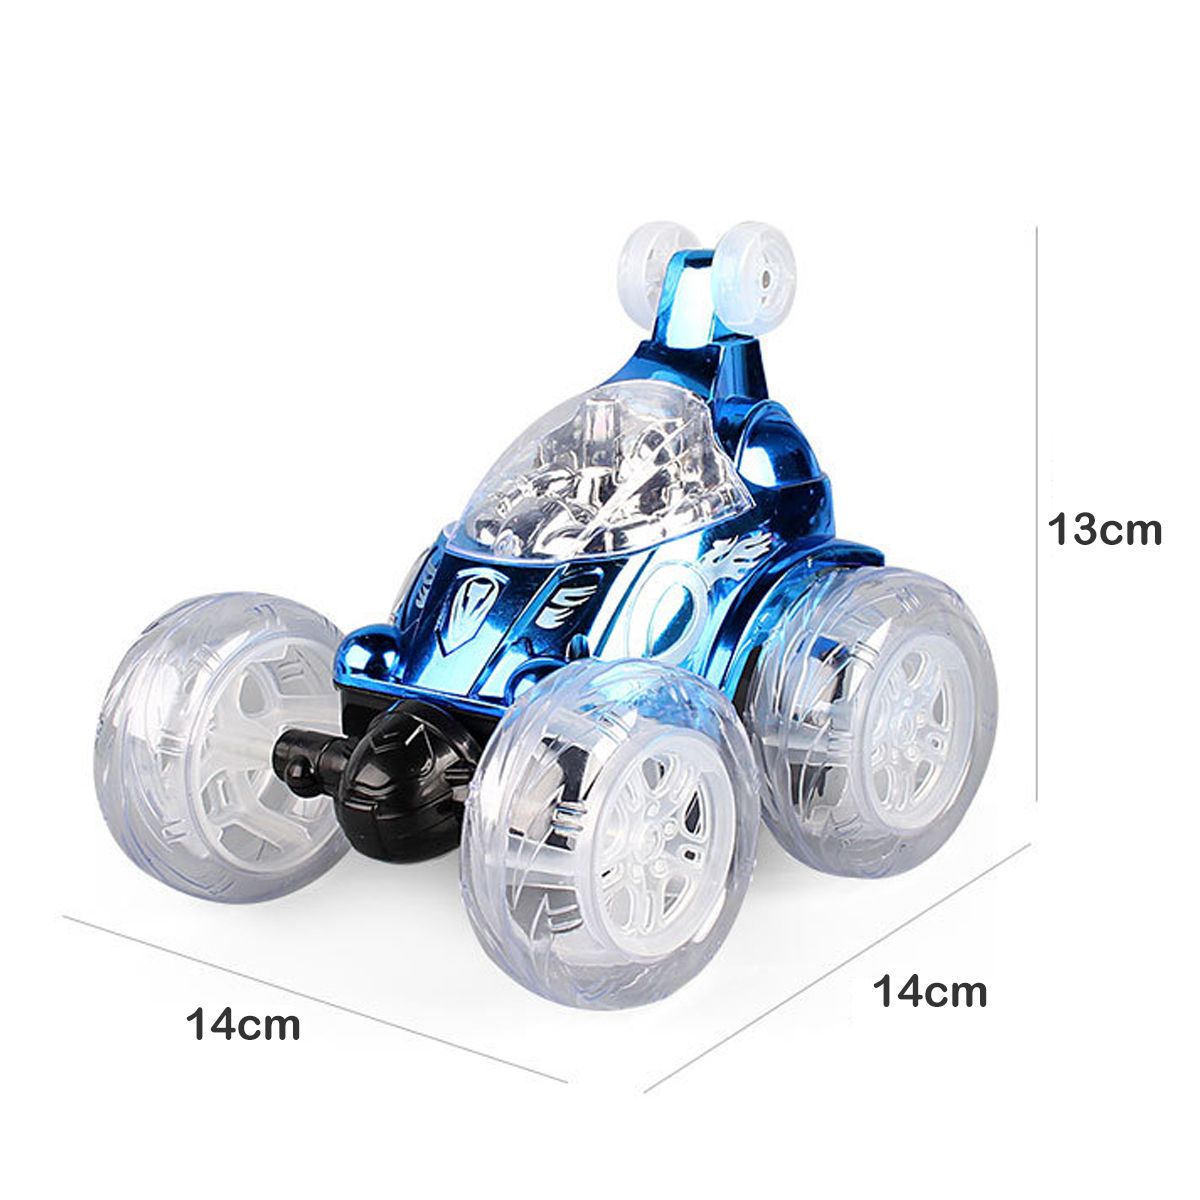 LED-Lights-Music-Remote-Control-360deg-Flips-Mini-Stunt-RC-Car-Toys-Gift-for-Kids-1634219